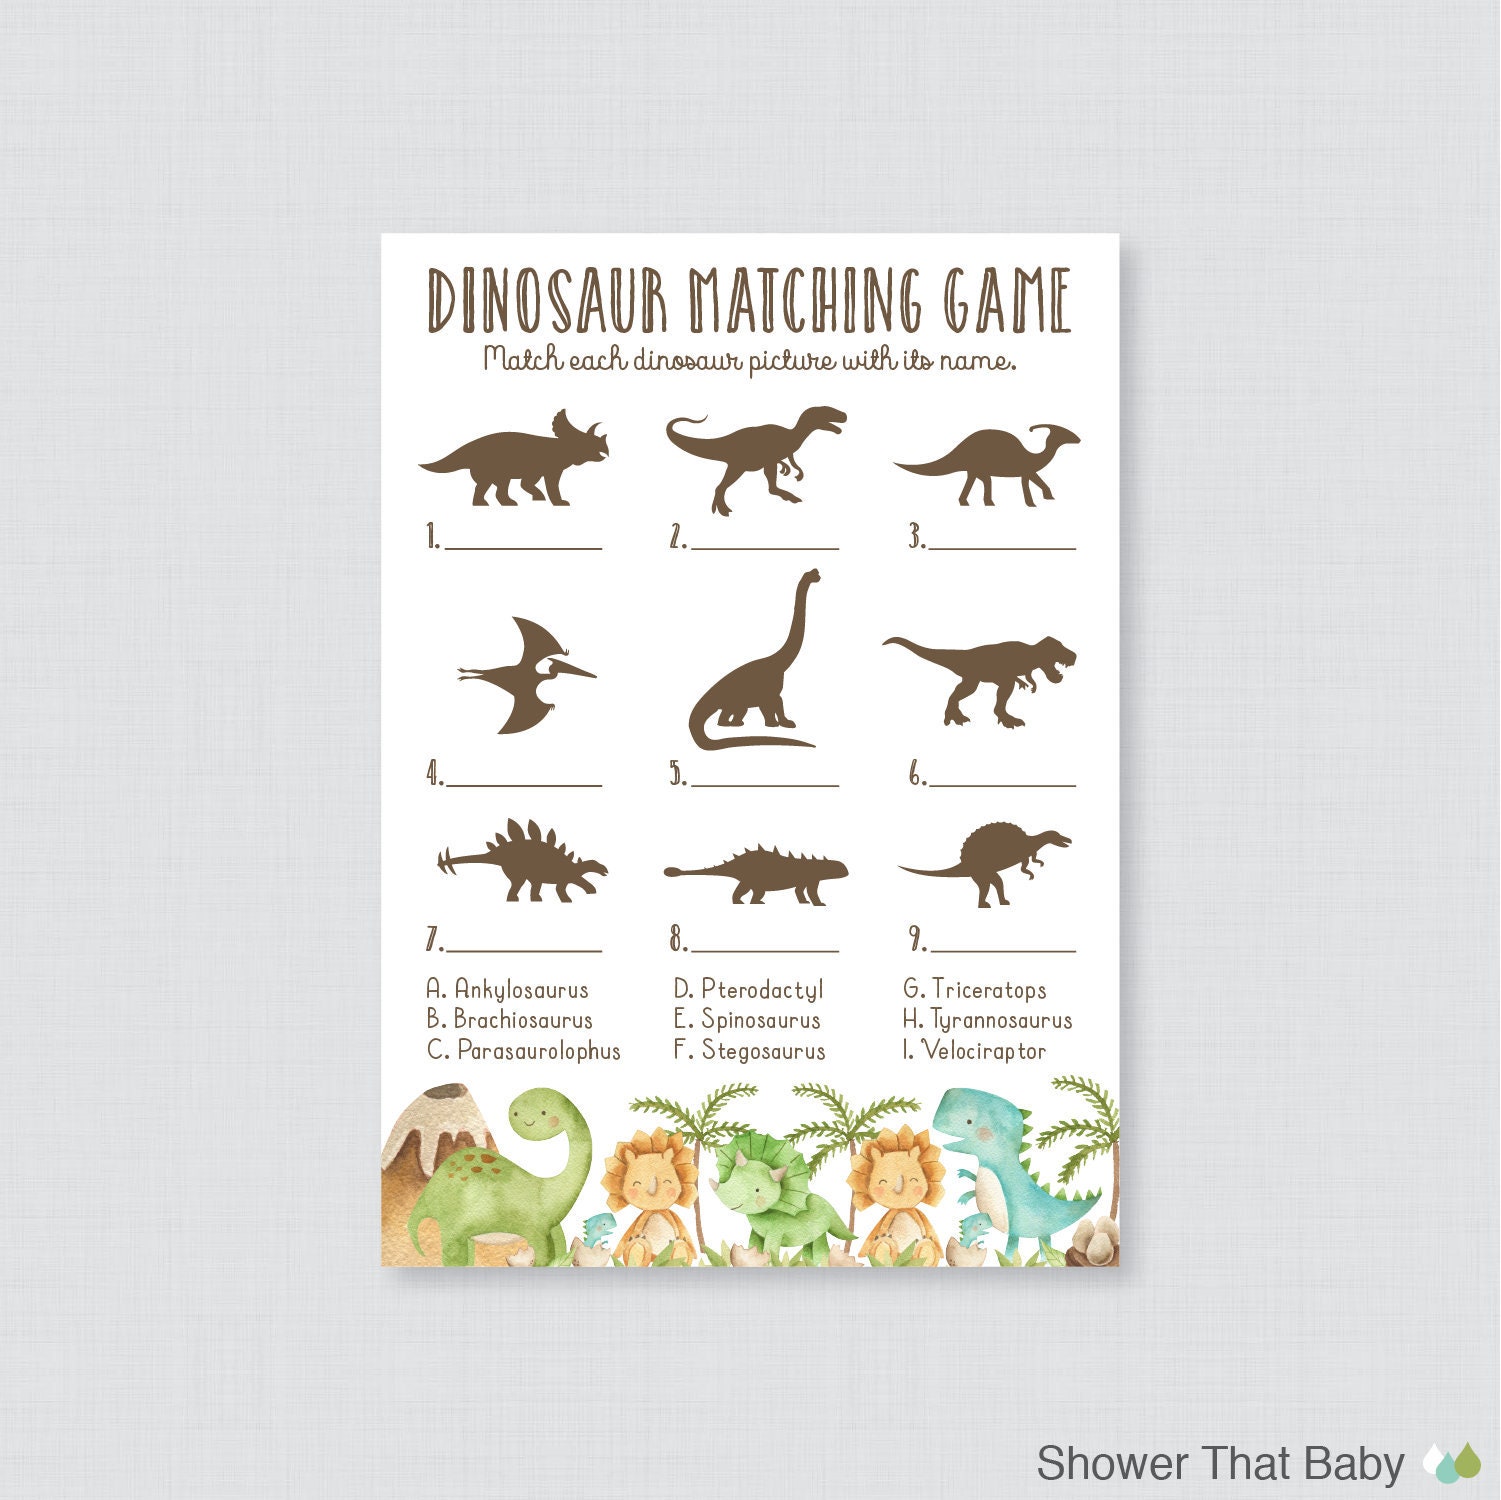 Types of Dinosaurs Matching Game